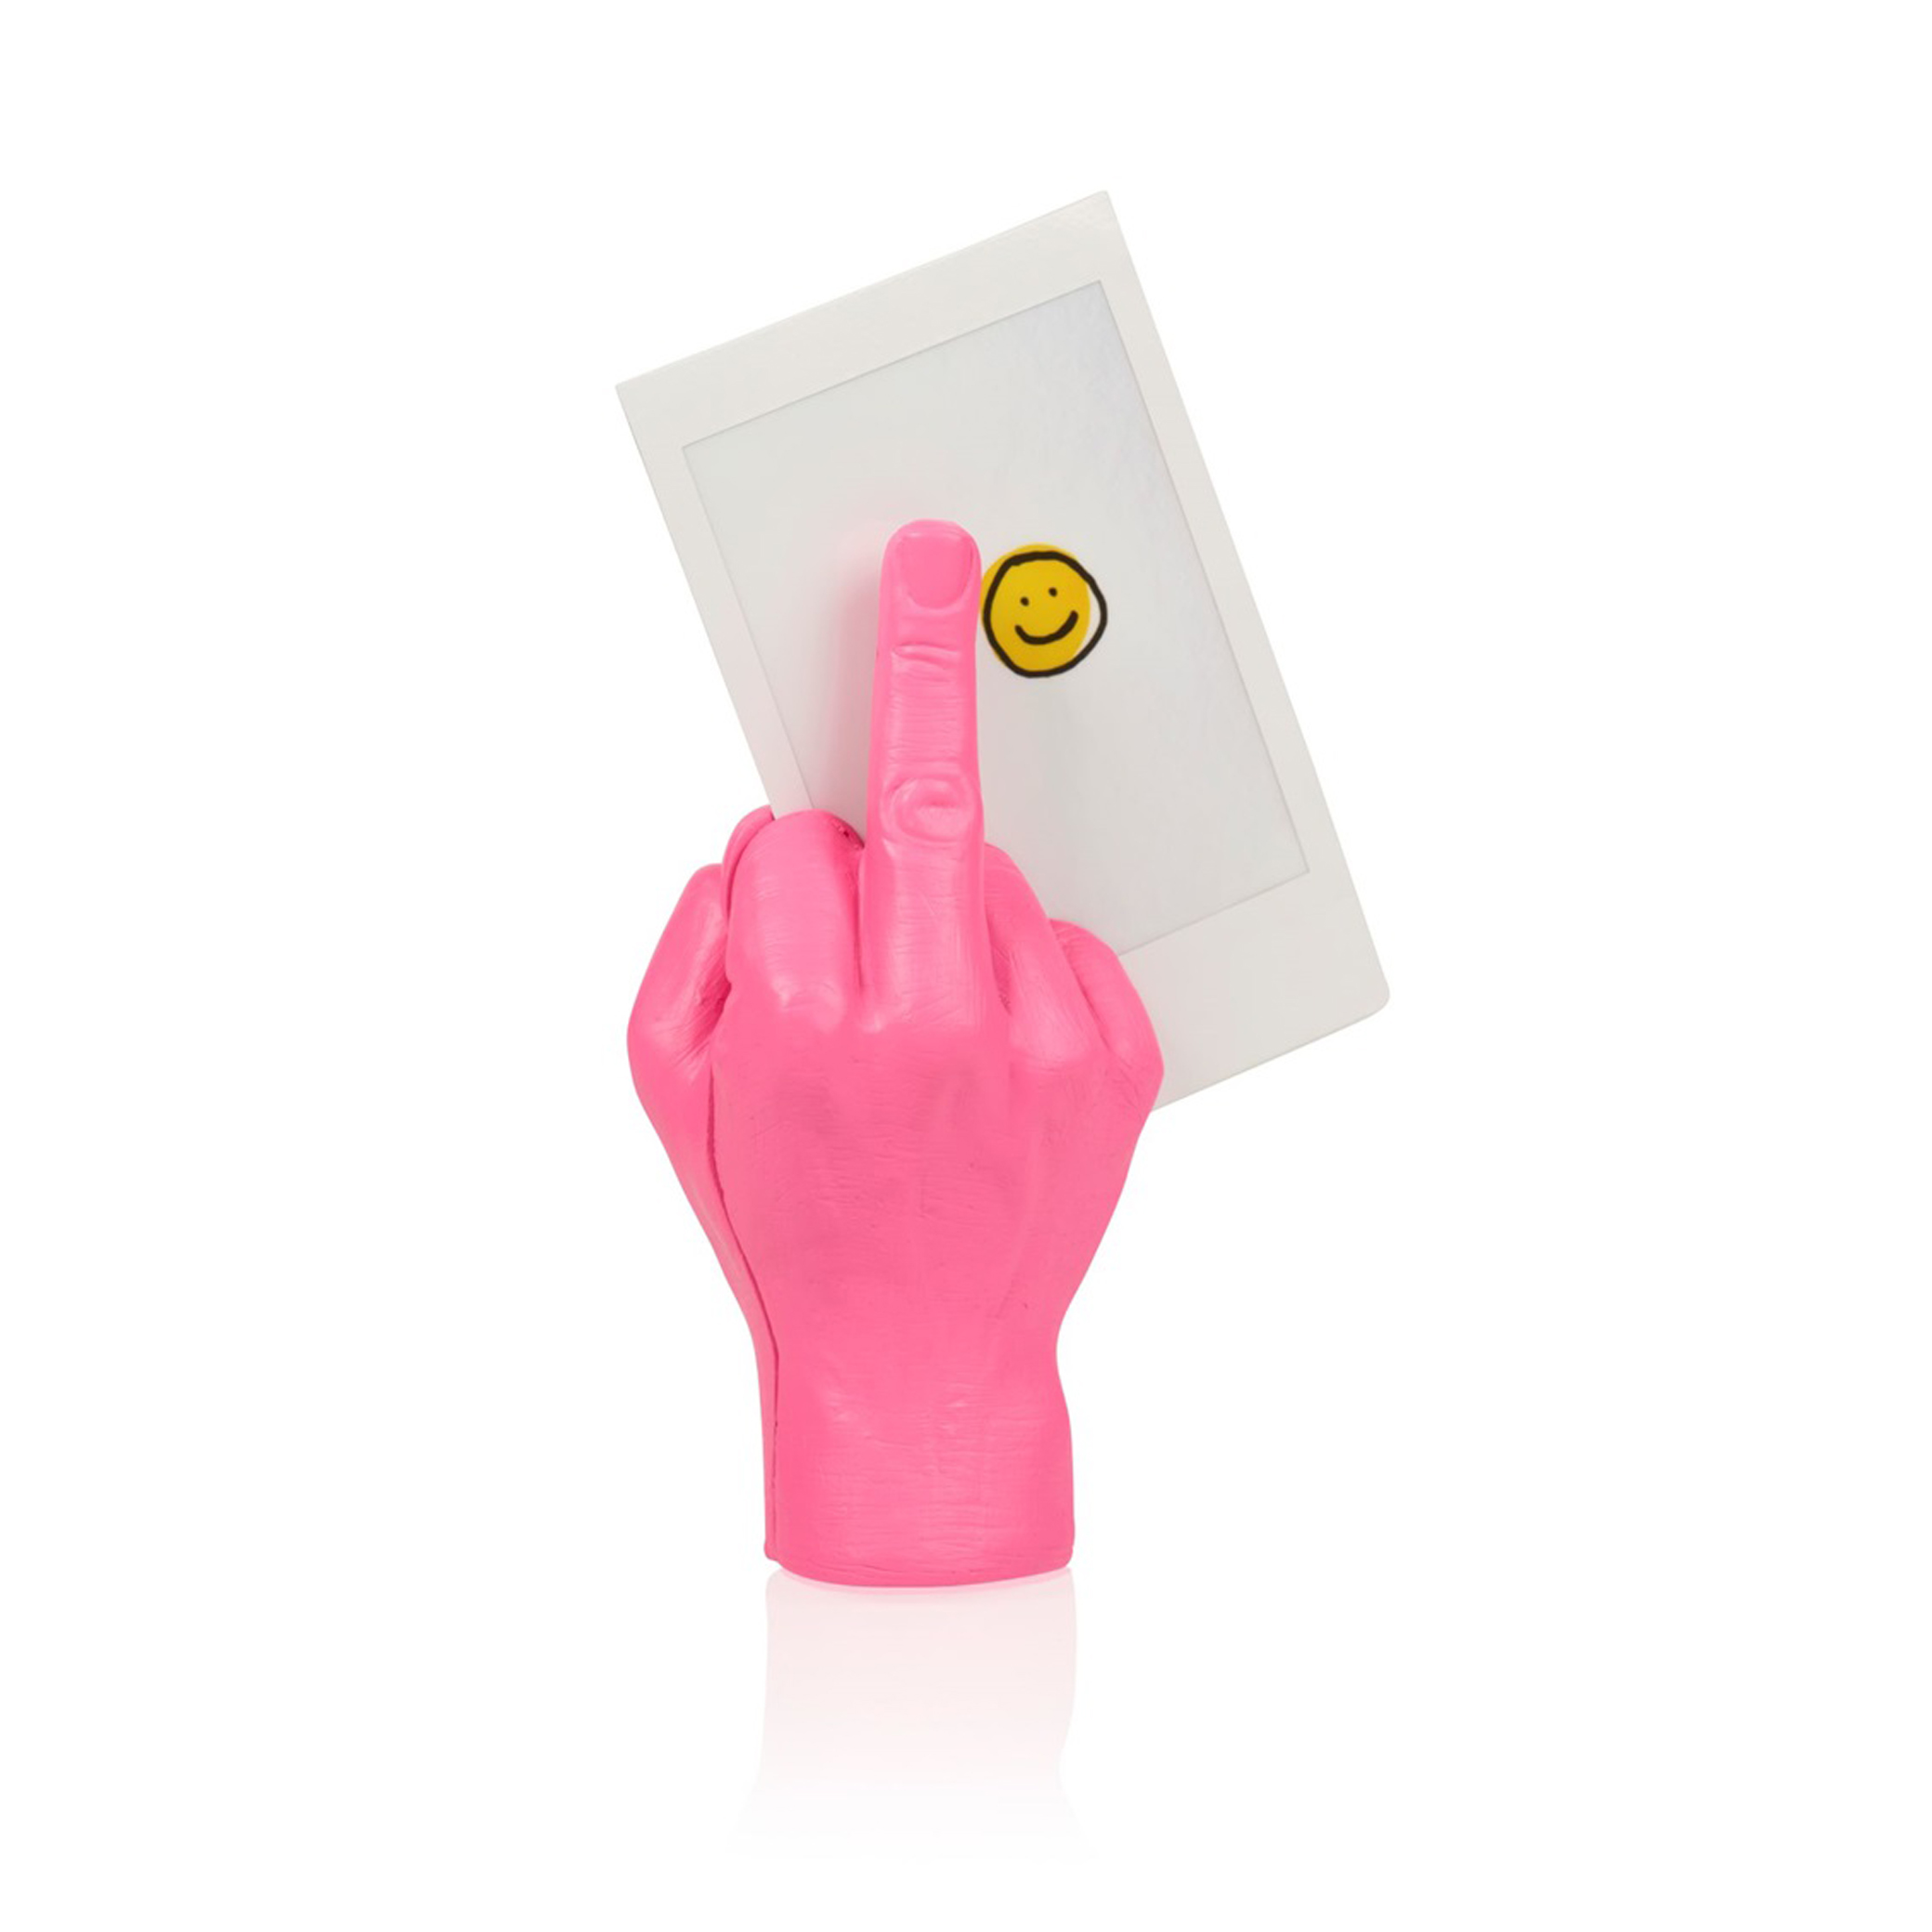 bitten-design-the-finger-photo-holder-pink